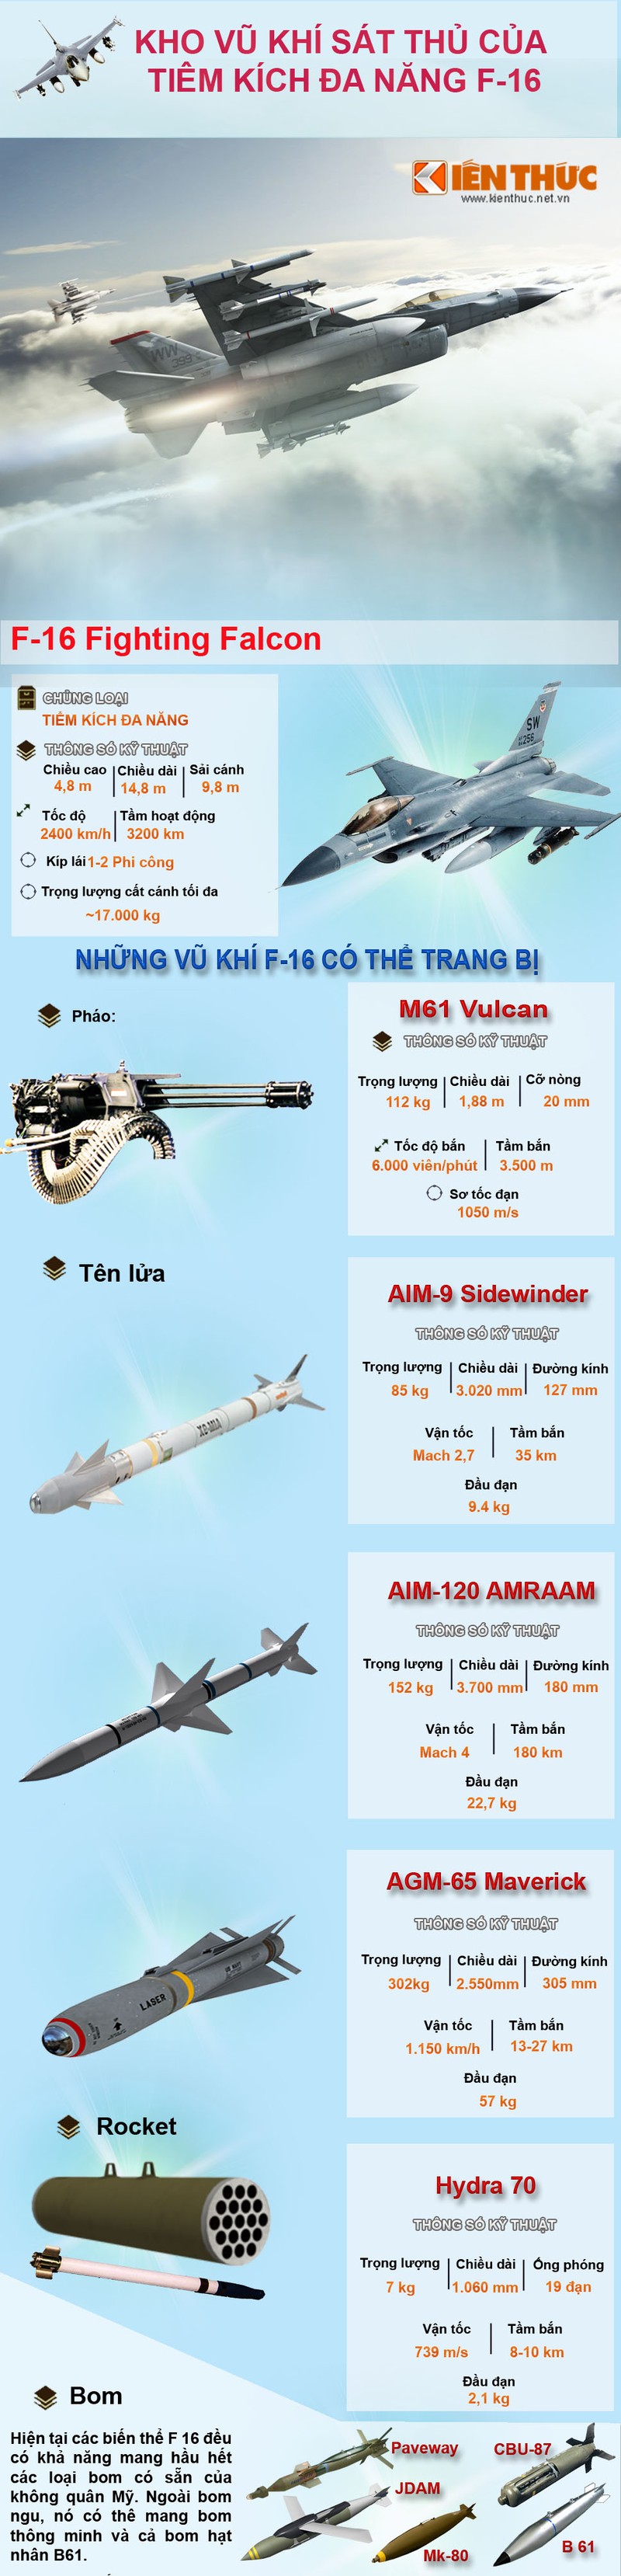 Infographic: Kho vu khi dang gom cua F-16 ban roi Su-24